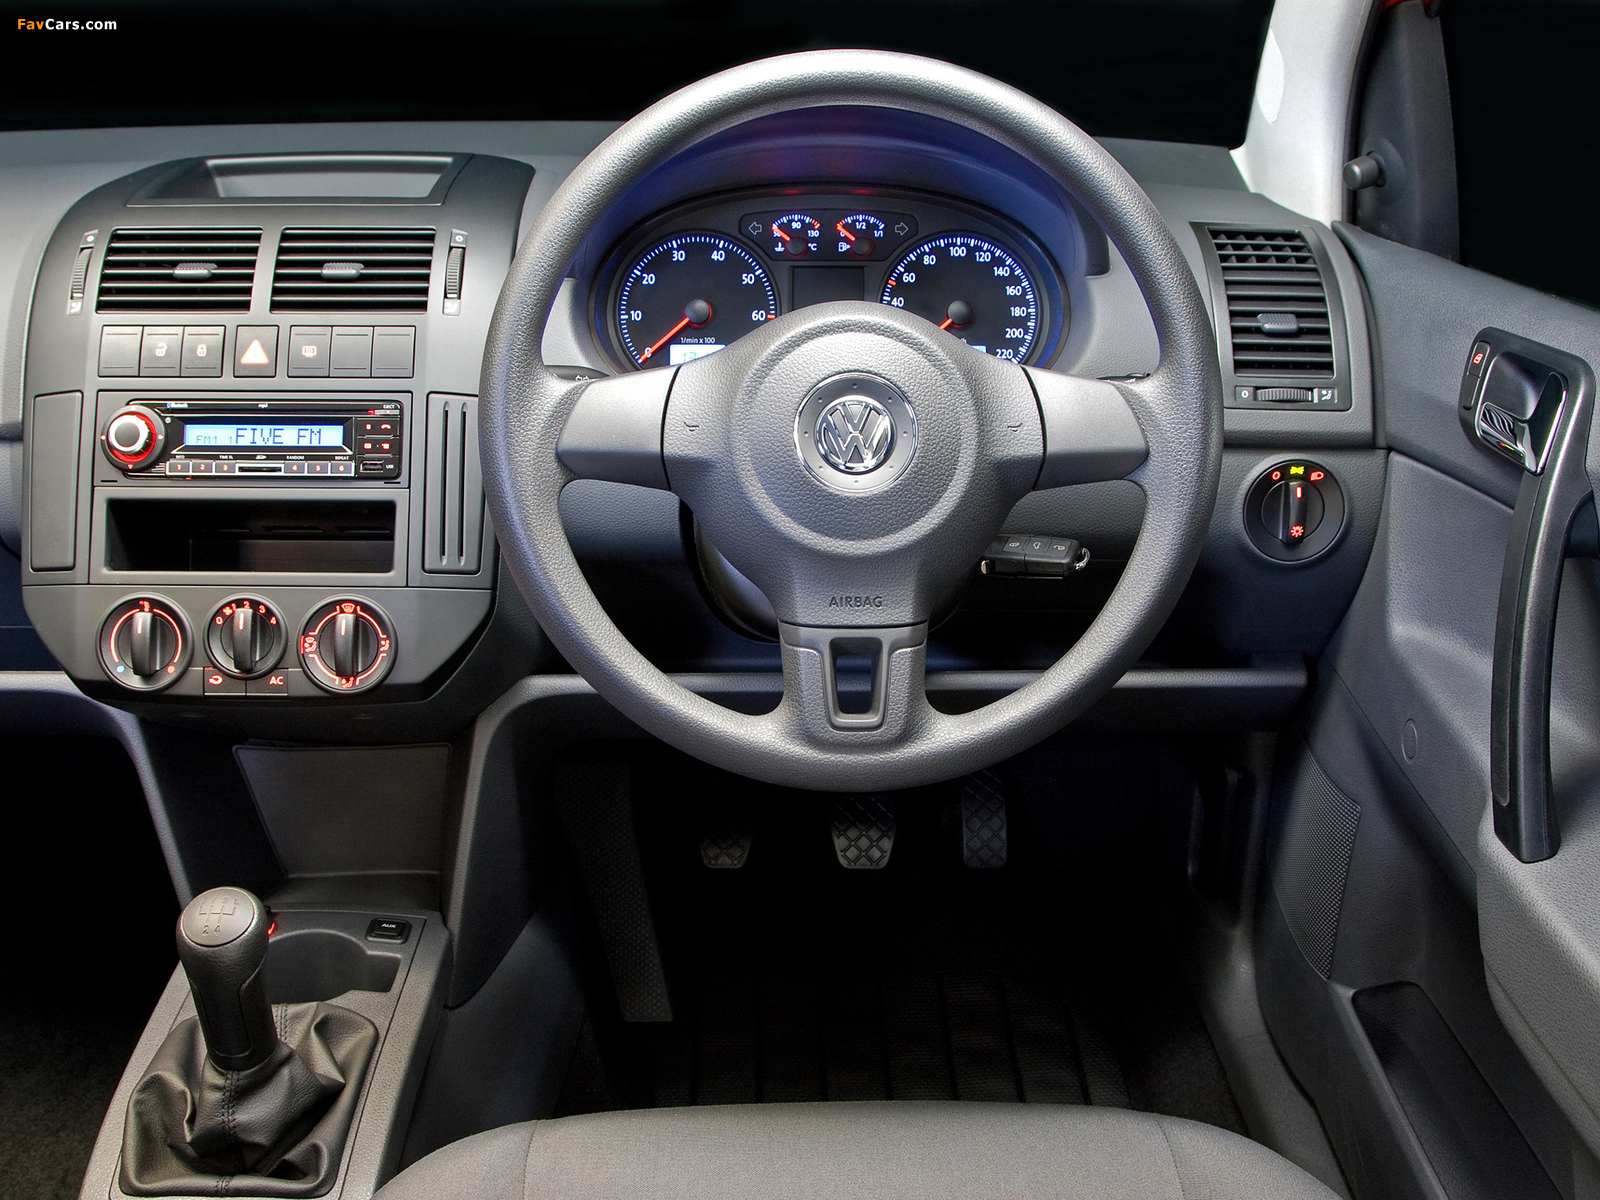 Volkswagen Polo Vivo Hatchback (IVf) 2010 photos (1600 x 1200)